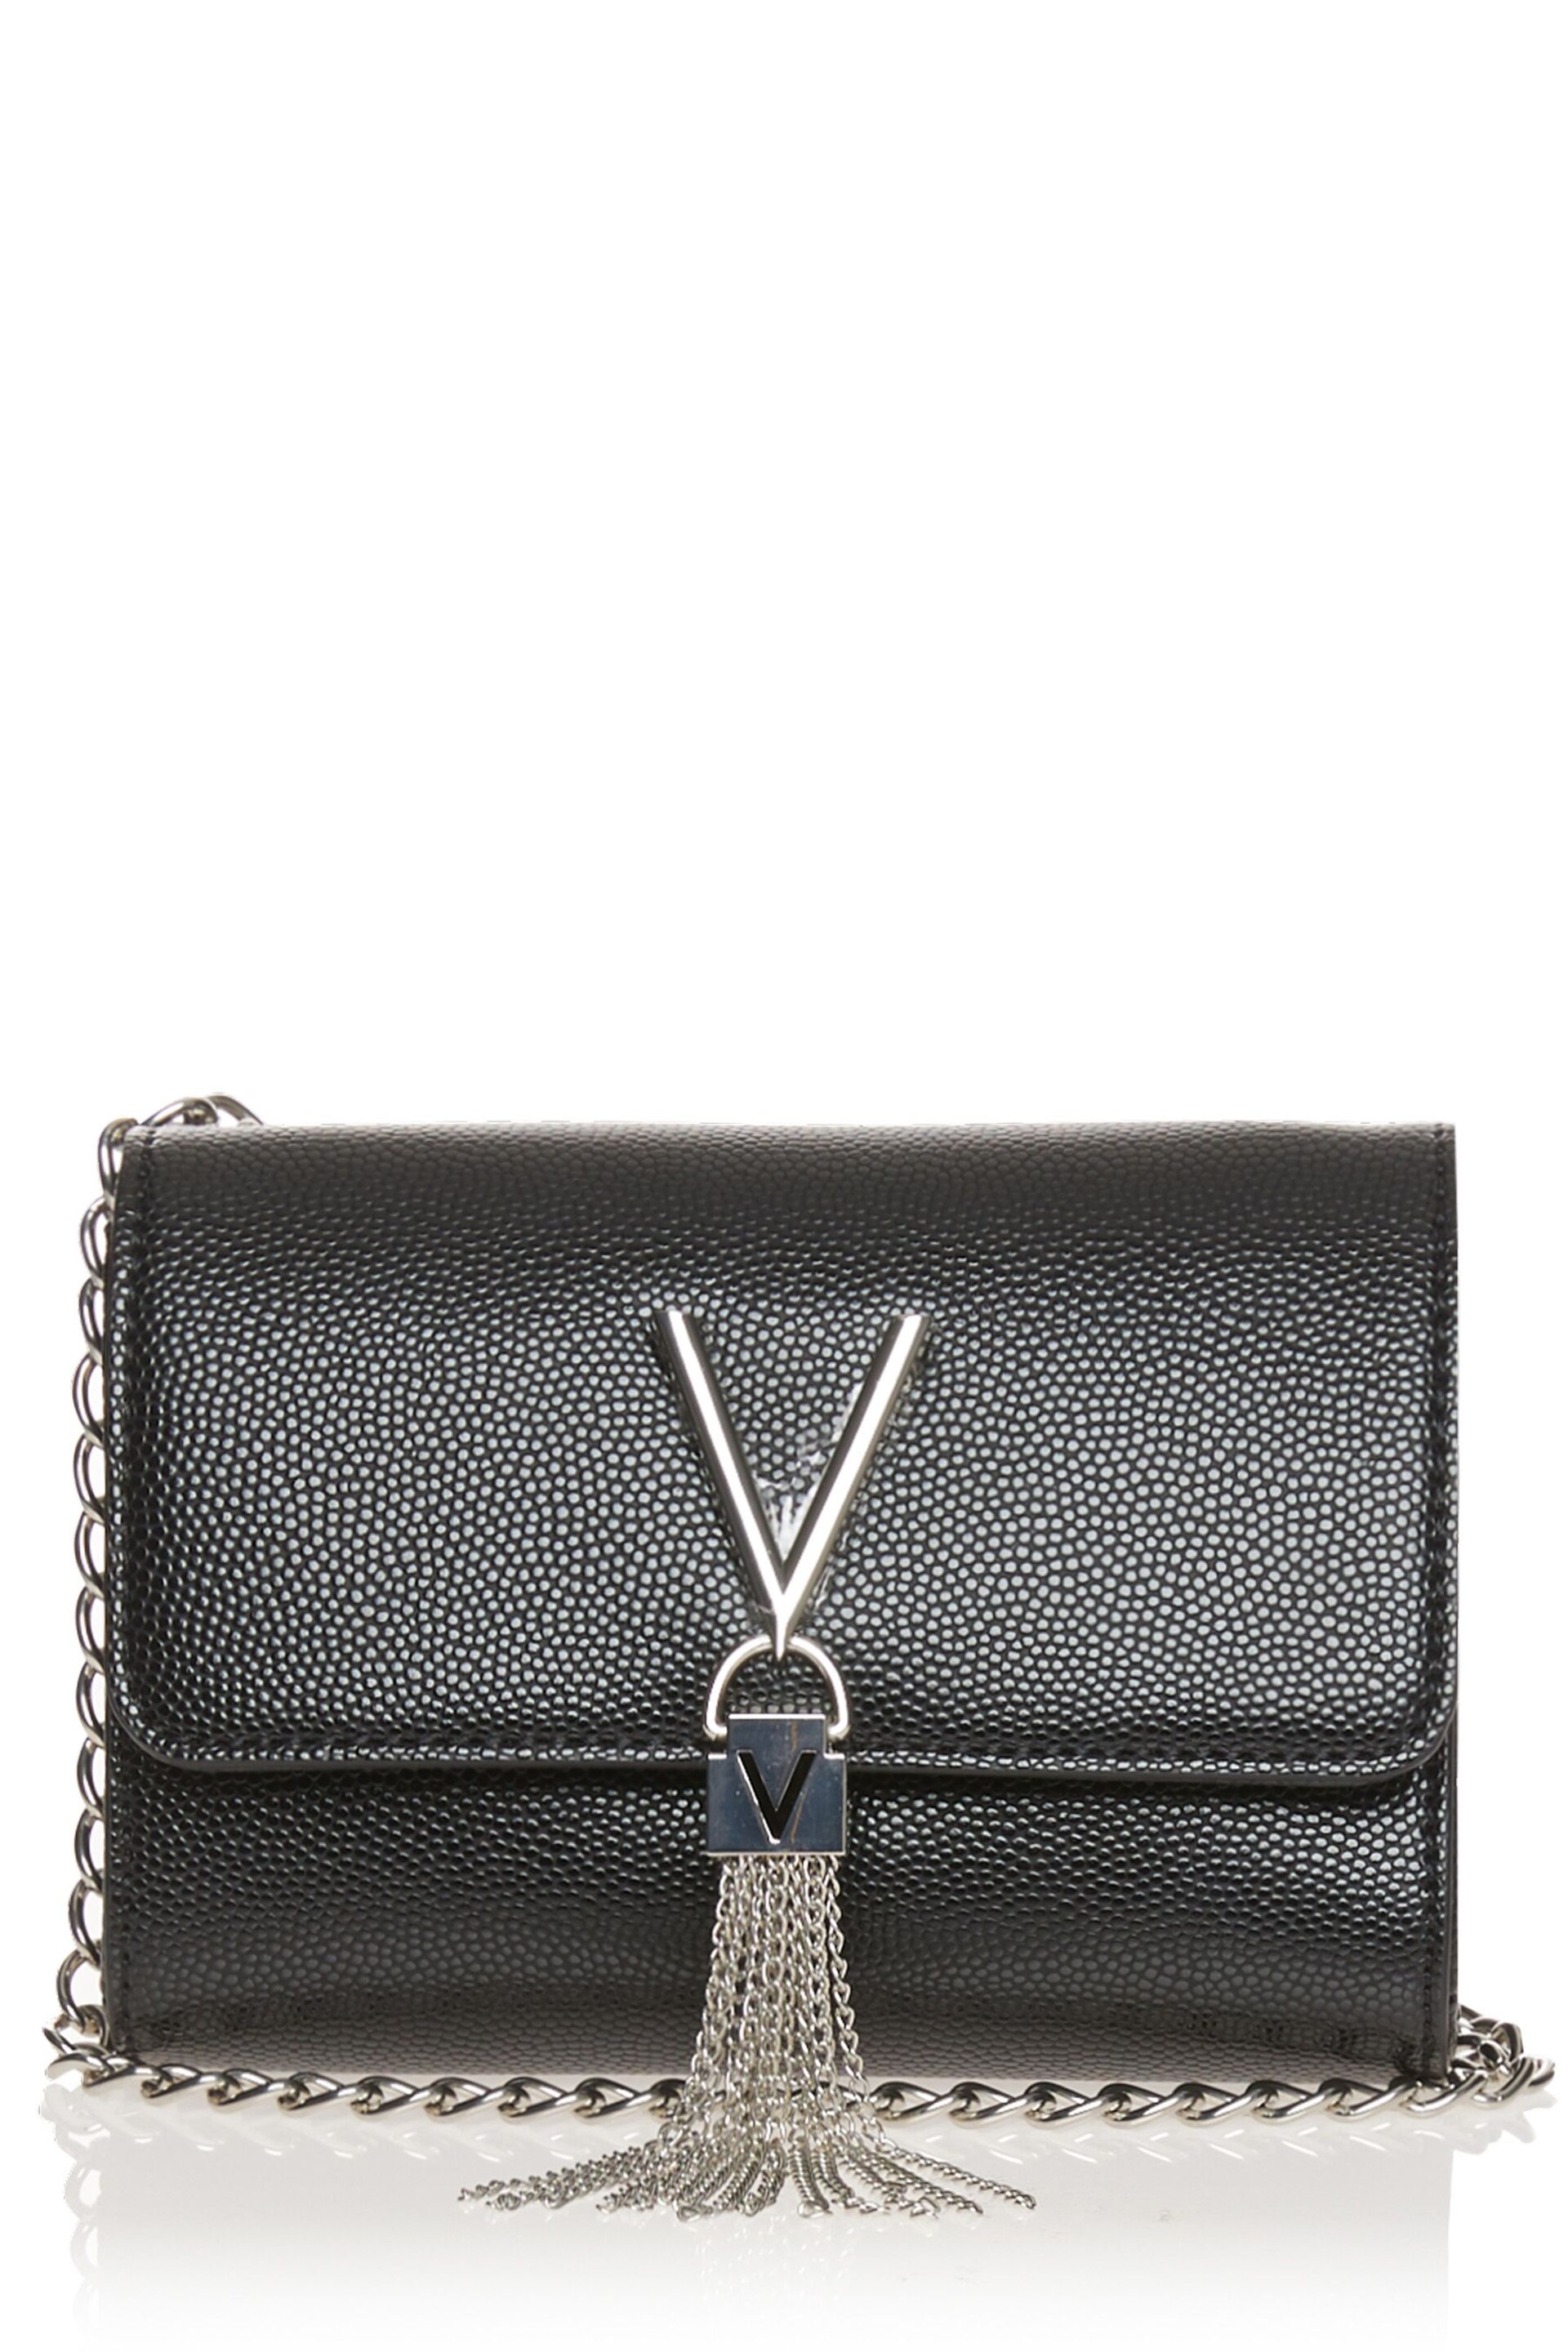 Valentino Bags Black Cross-Body Divina Tassel Bag - Image 2 of 5